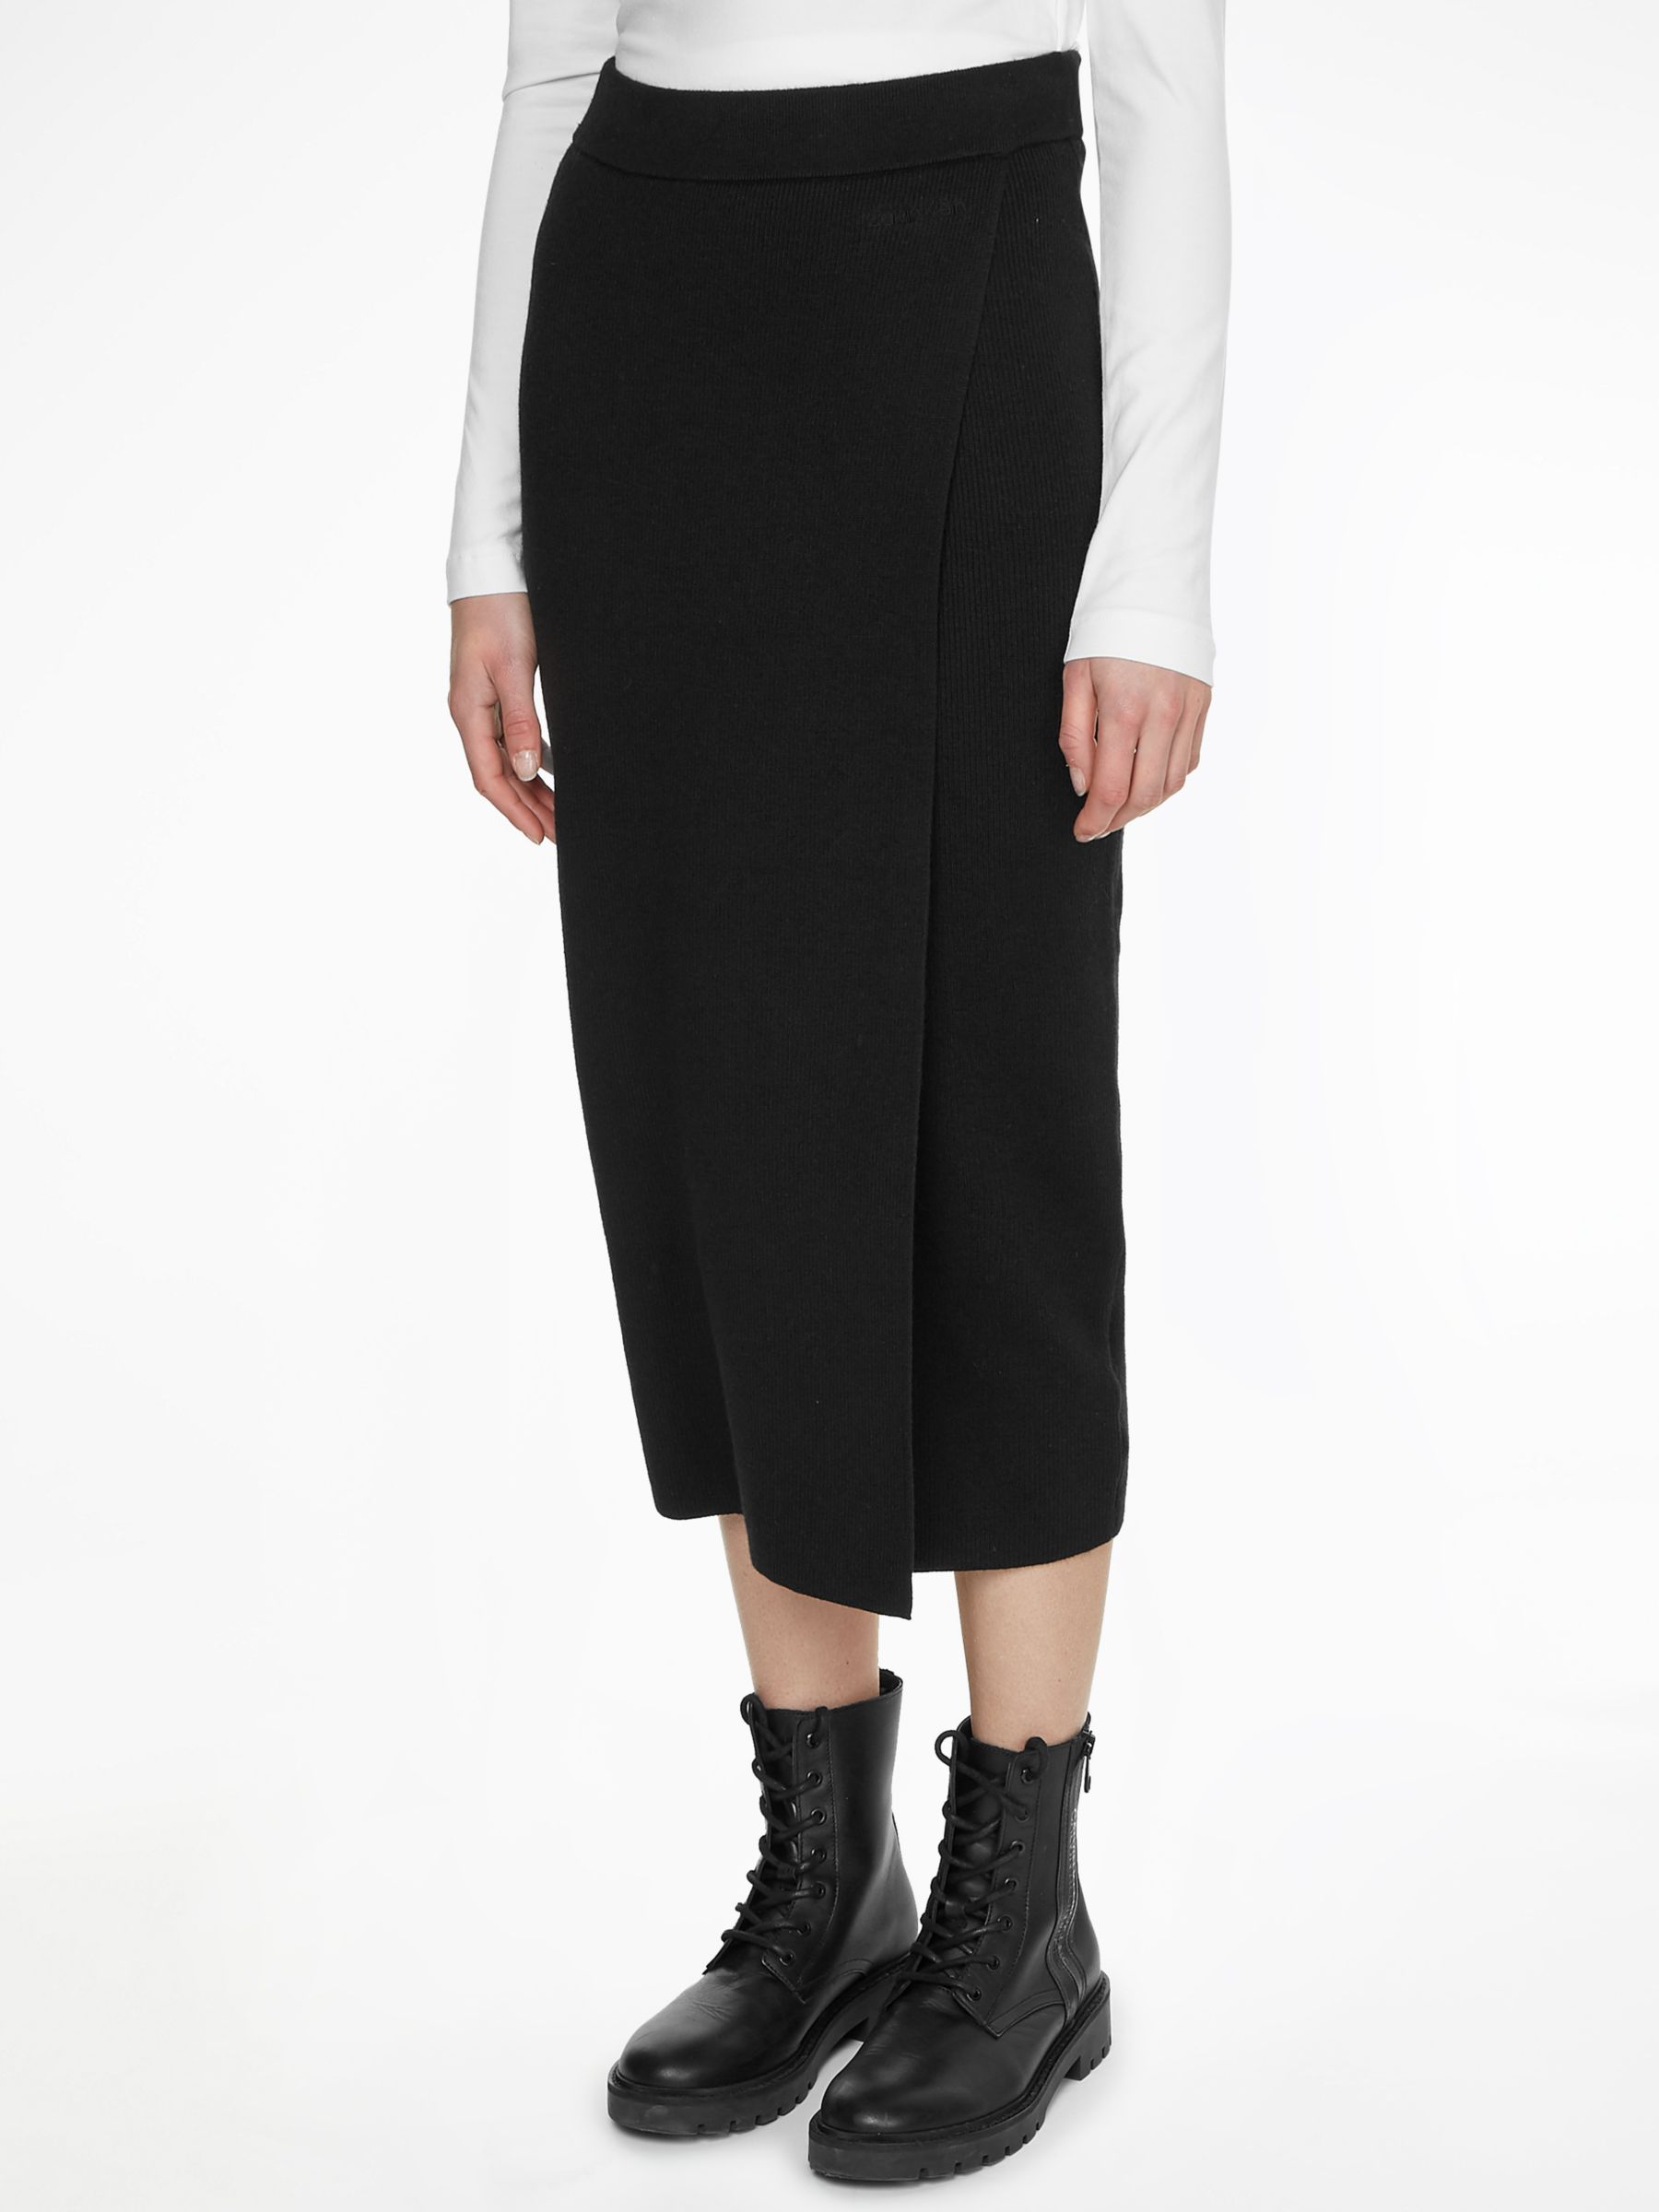 Calvin Klein Wool Blend Fitted Skirt, Black at John Lewis & Partners